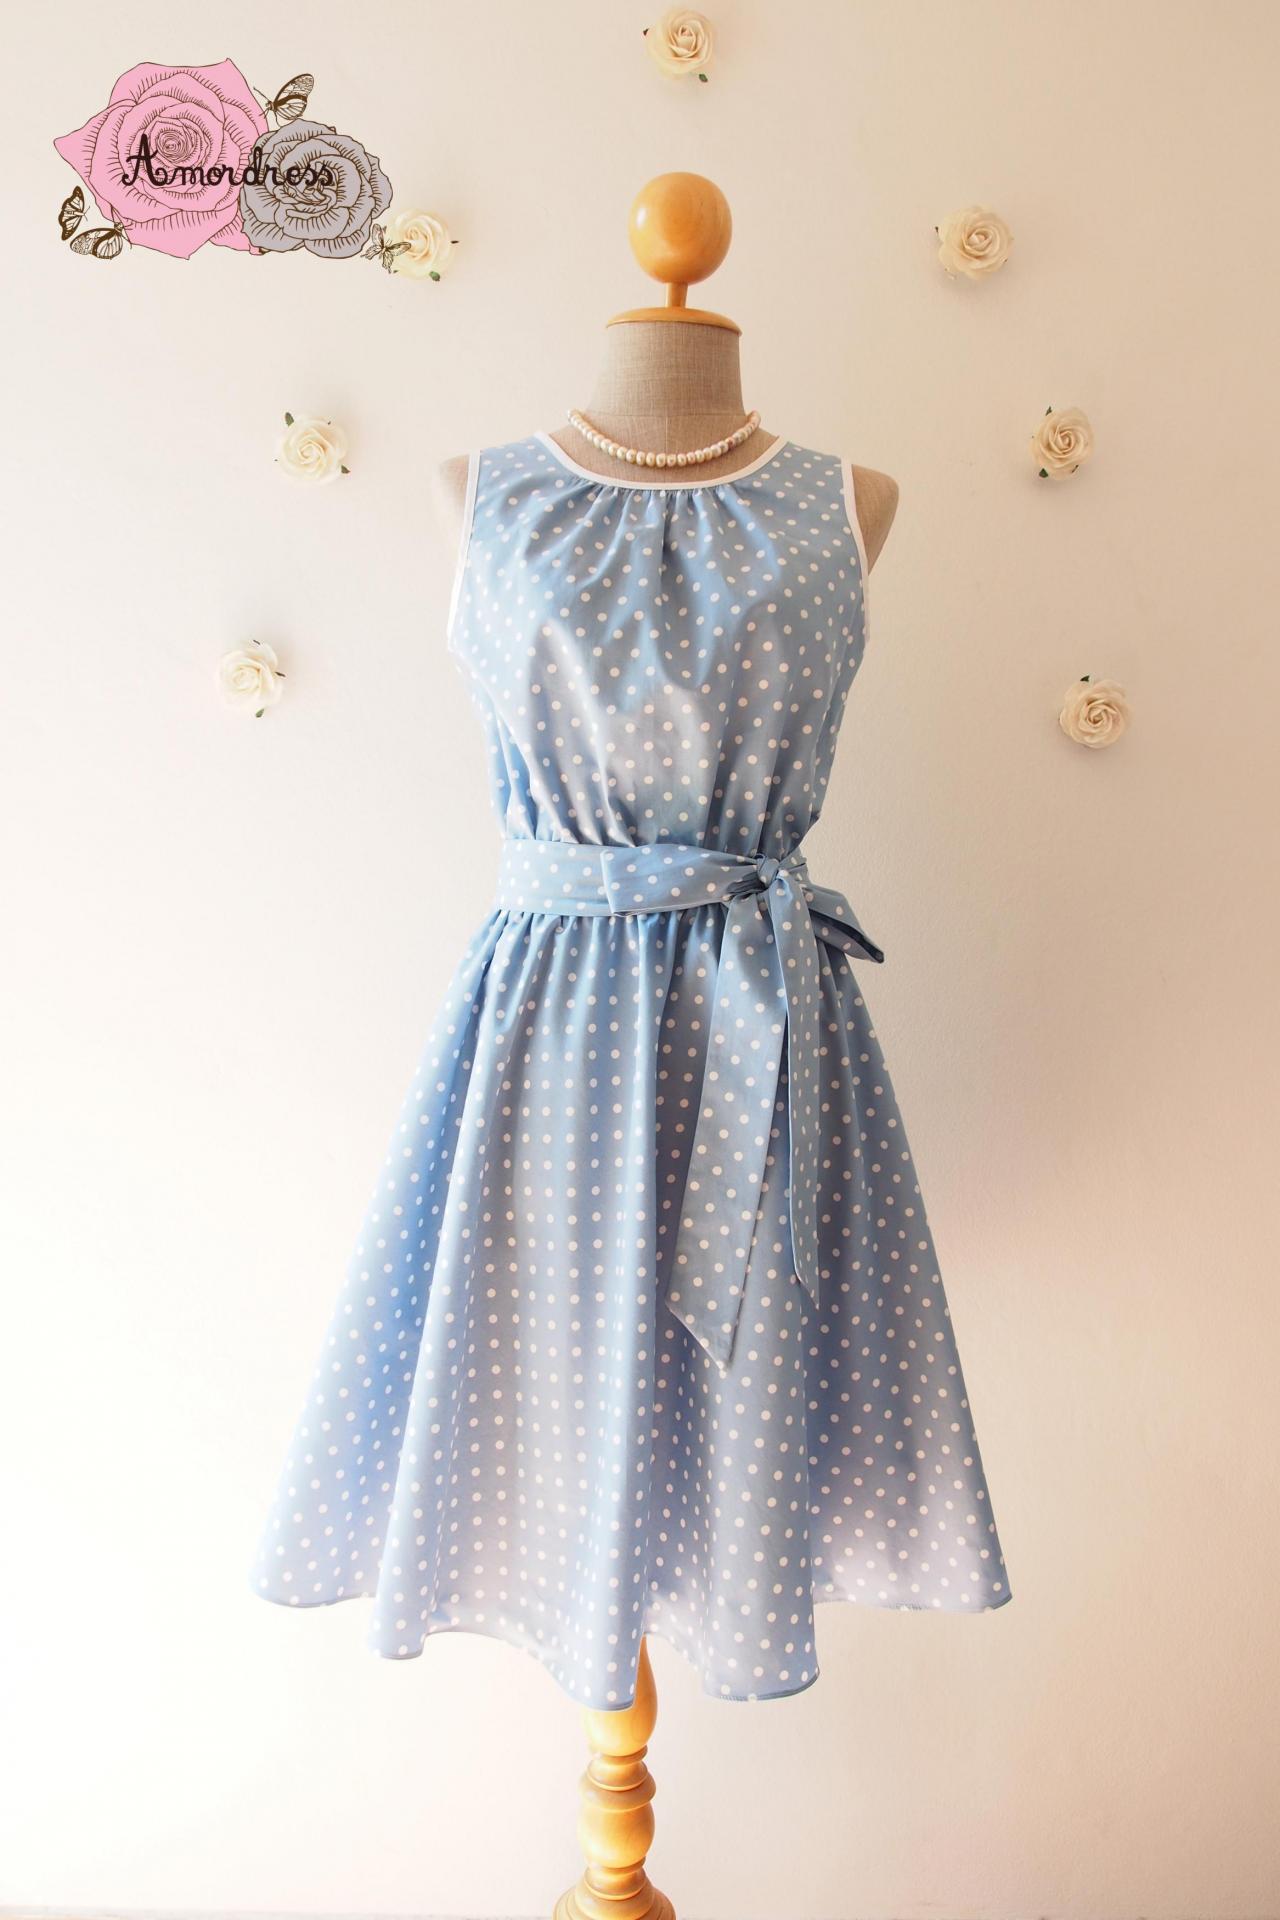 Baby Blue Dress Polka Dot Swing Dress Vintage Retro 50's Inspired Tea Dress Blue Bridesmaid Dress Party Dress Dancing Dress -xs-xl